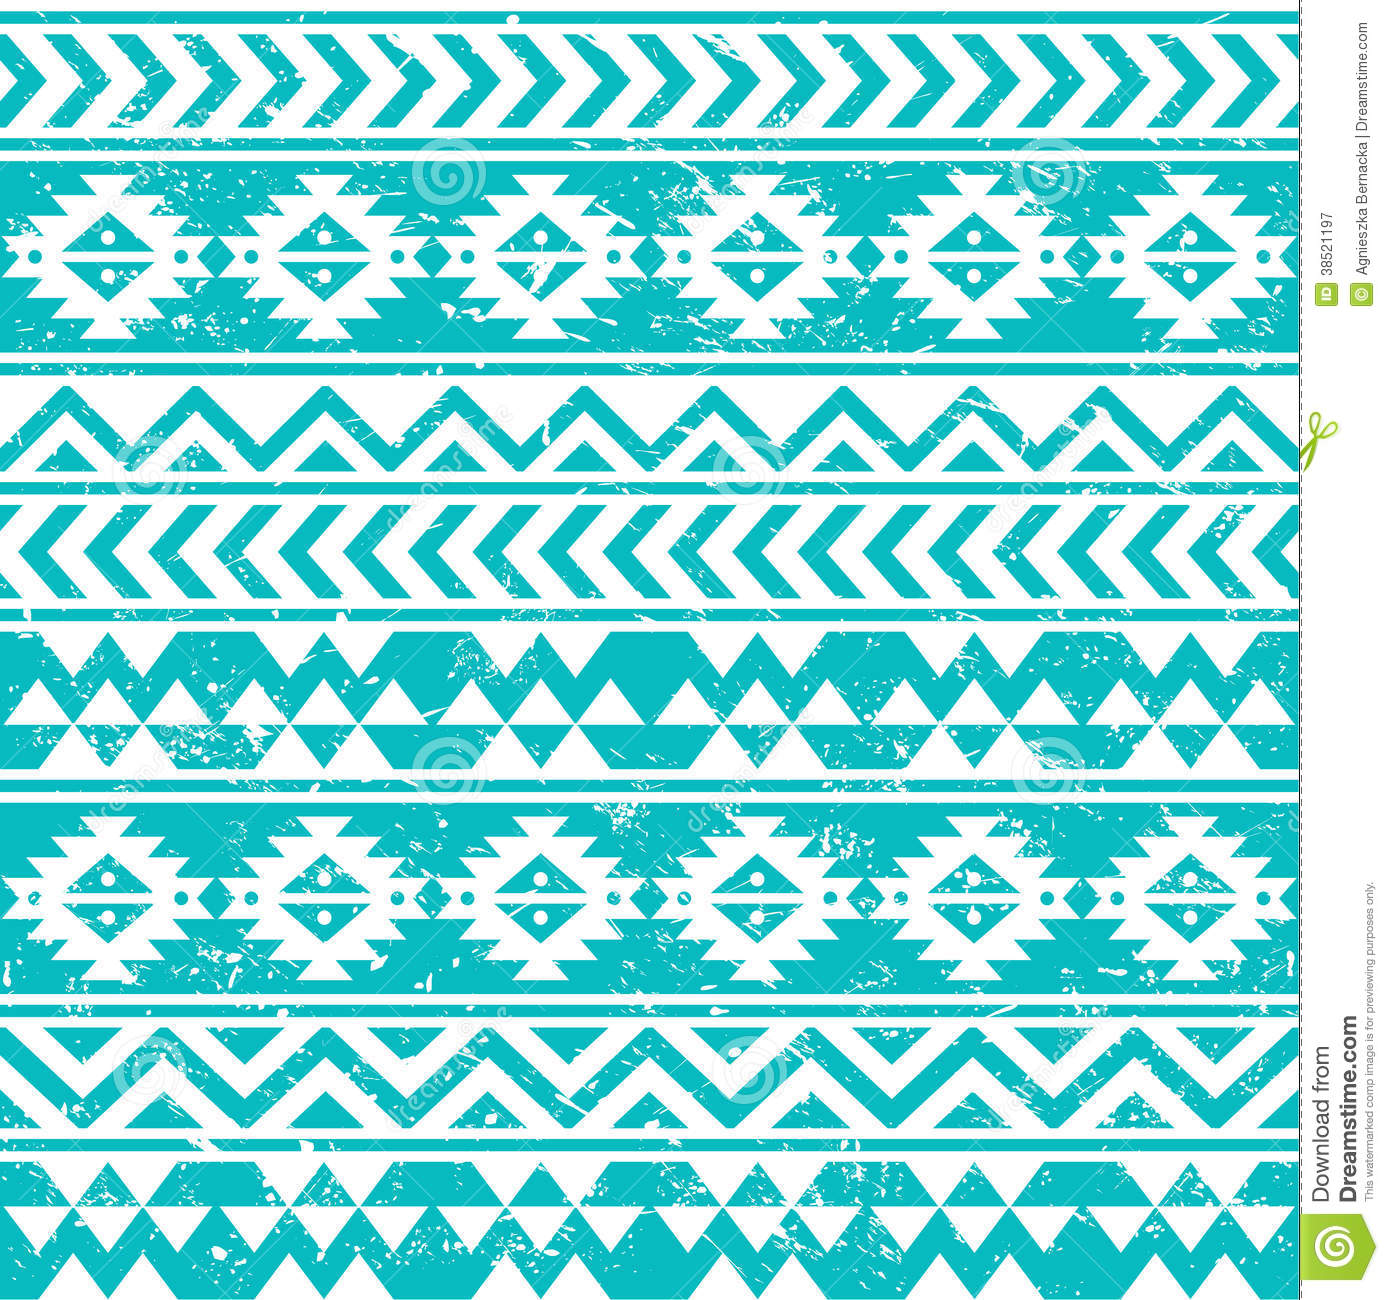 Aztec Tribal Seamless Grunge White Pattern On Blue Background Royalty